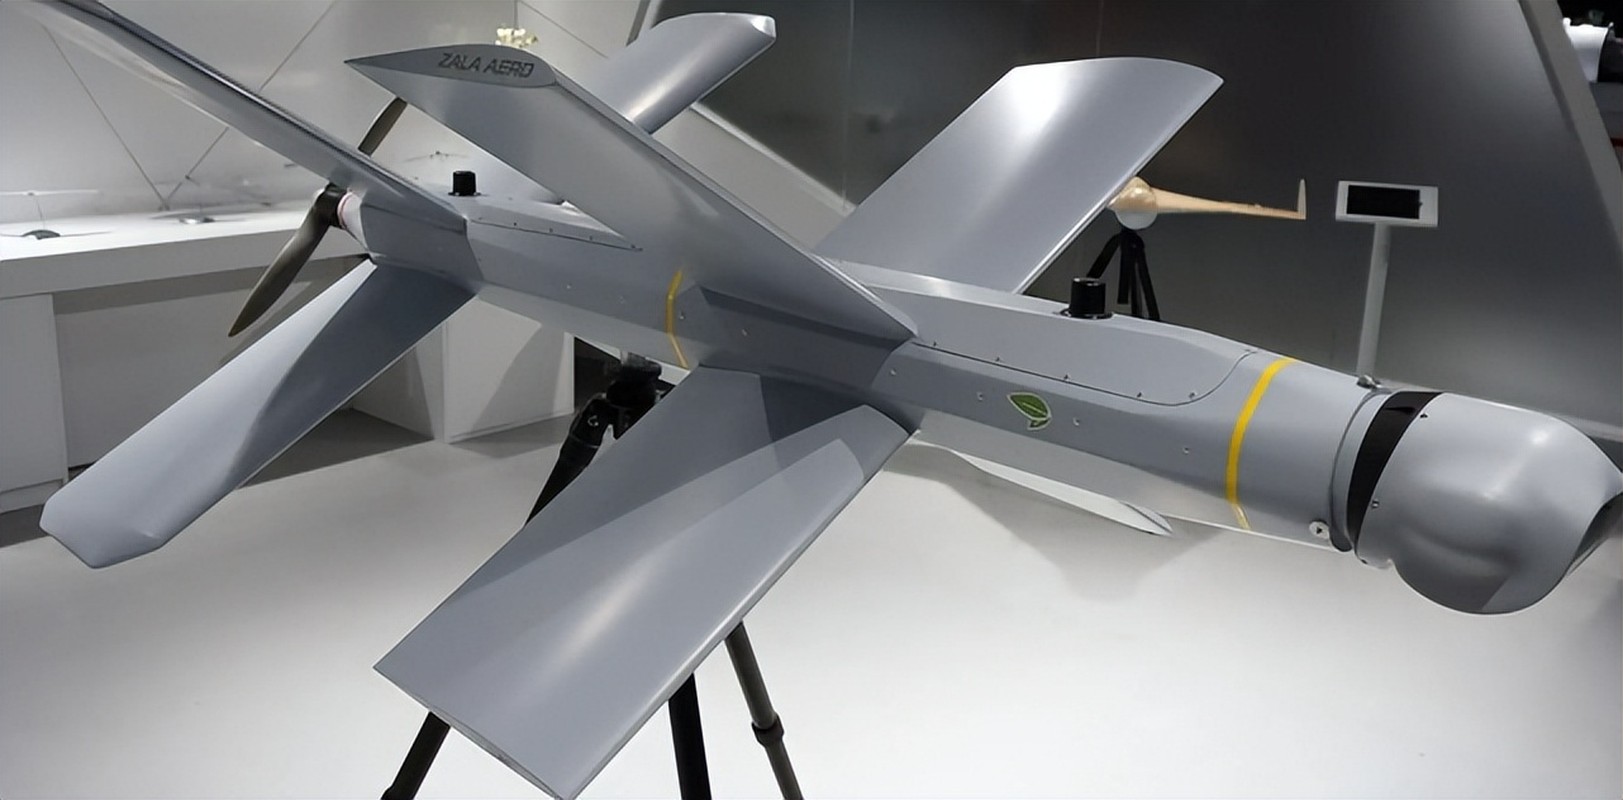 Can canh don danh ha guc ten lua S-300 cua UAV Lancet-Hinh-3